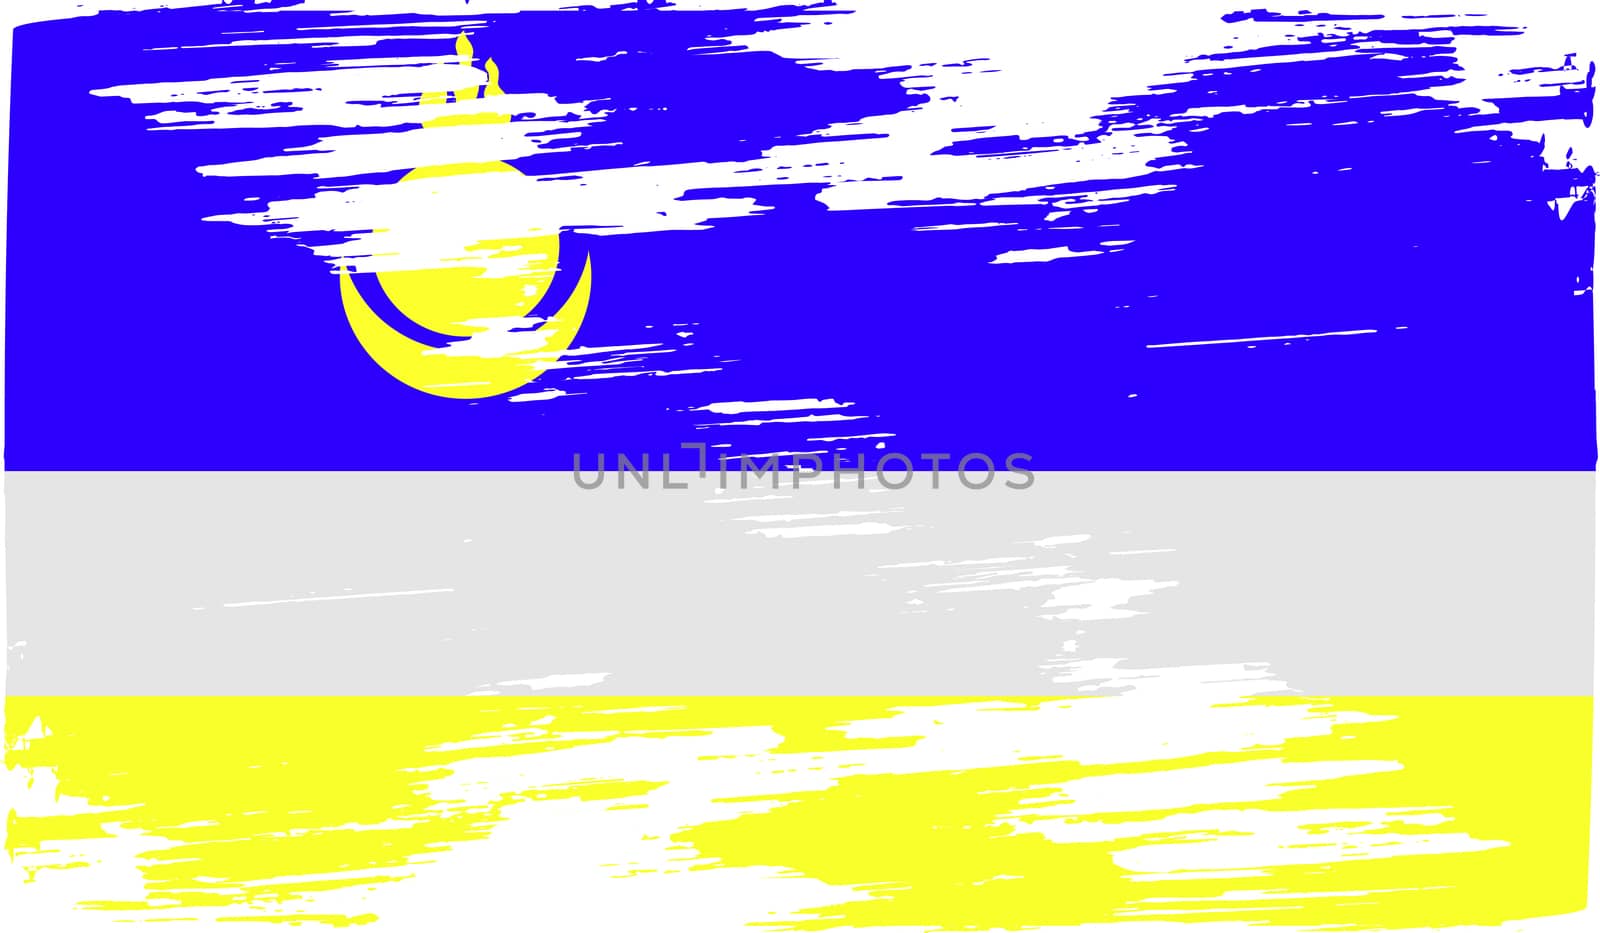 Flag of Buryatia with old texture.  illustration